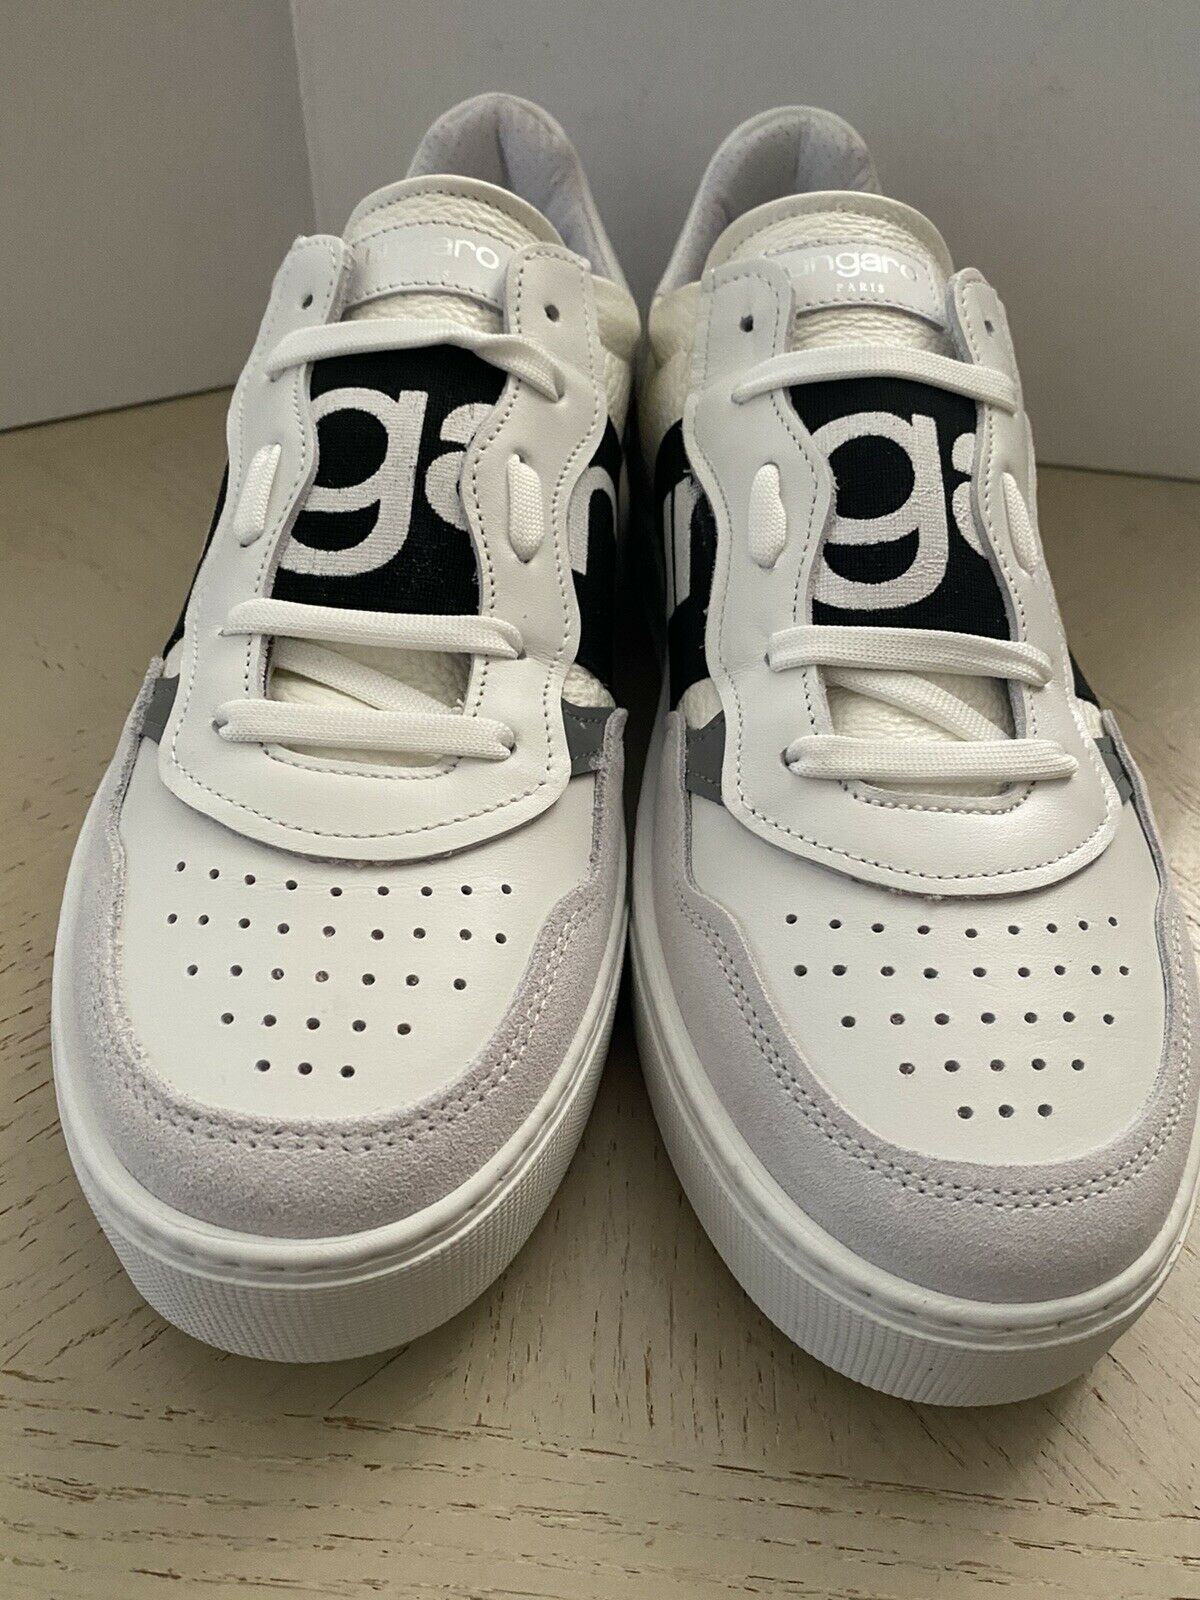 New Ungaro Men’s Sneakers Shoes White 10 US ( 43 Eu ) Italy